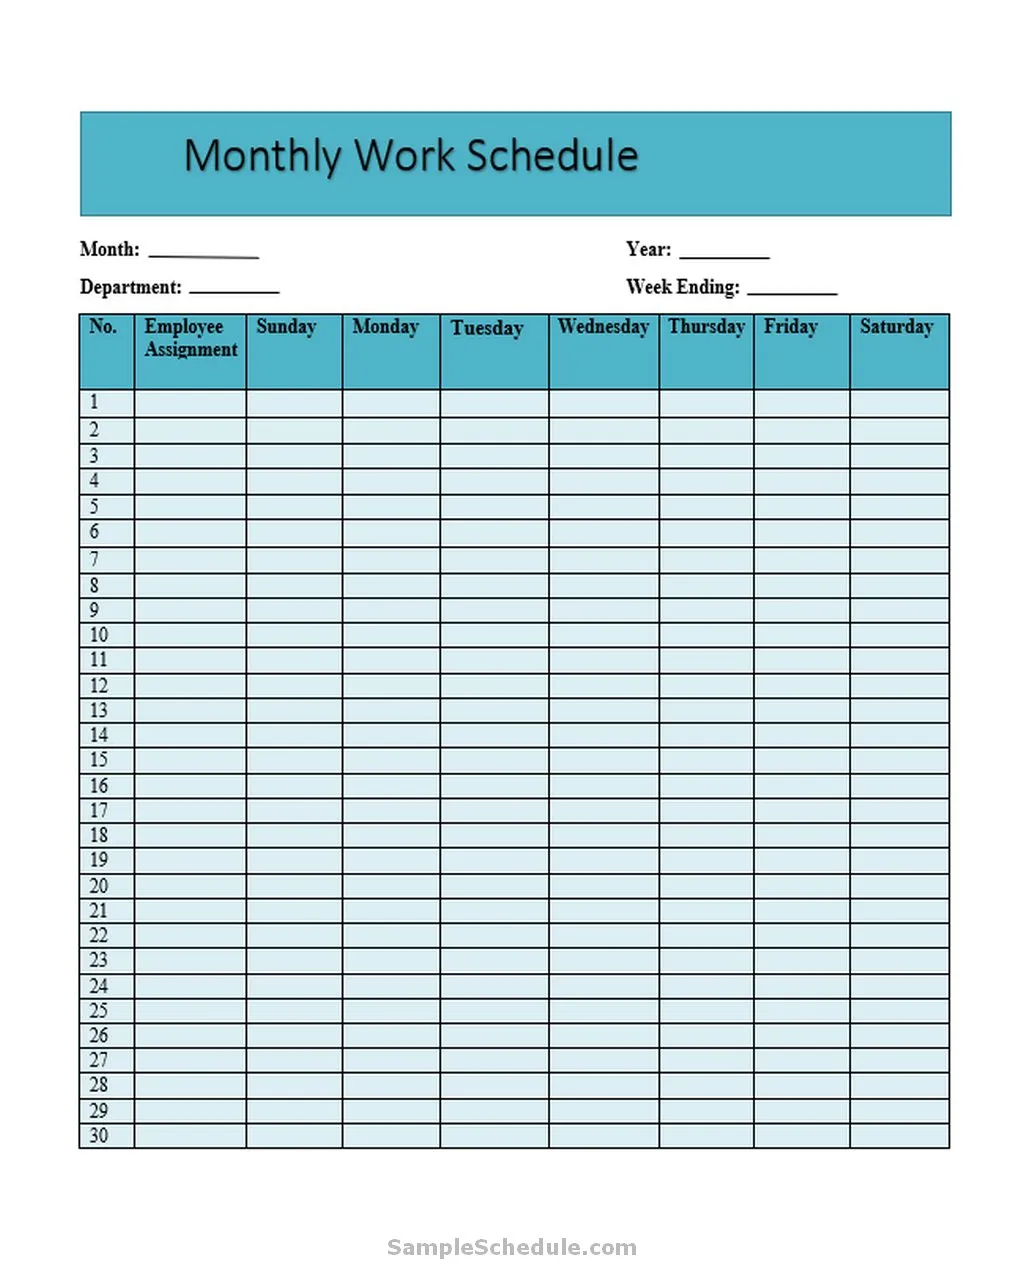 Monthly Work Schedule Template 05